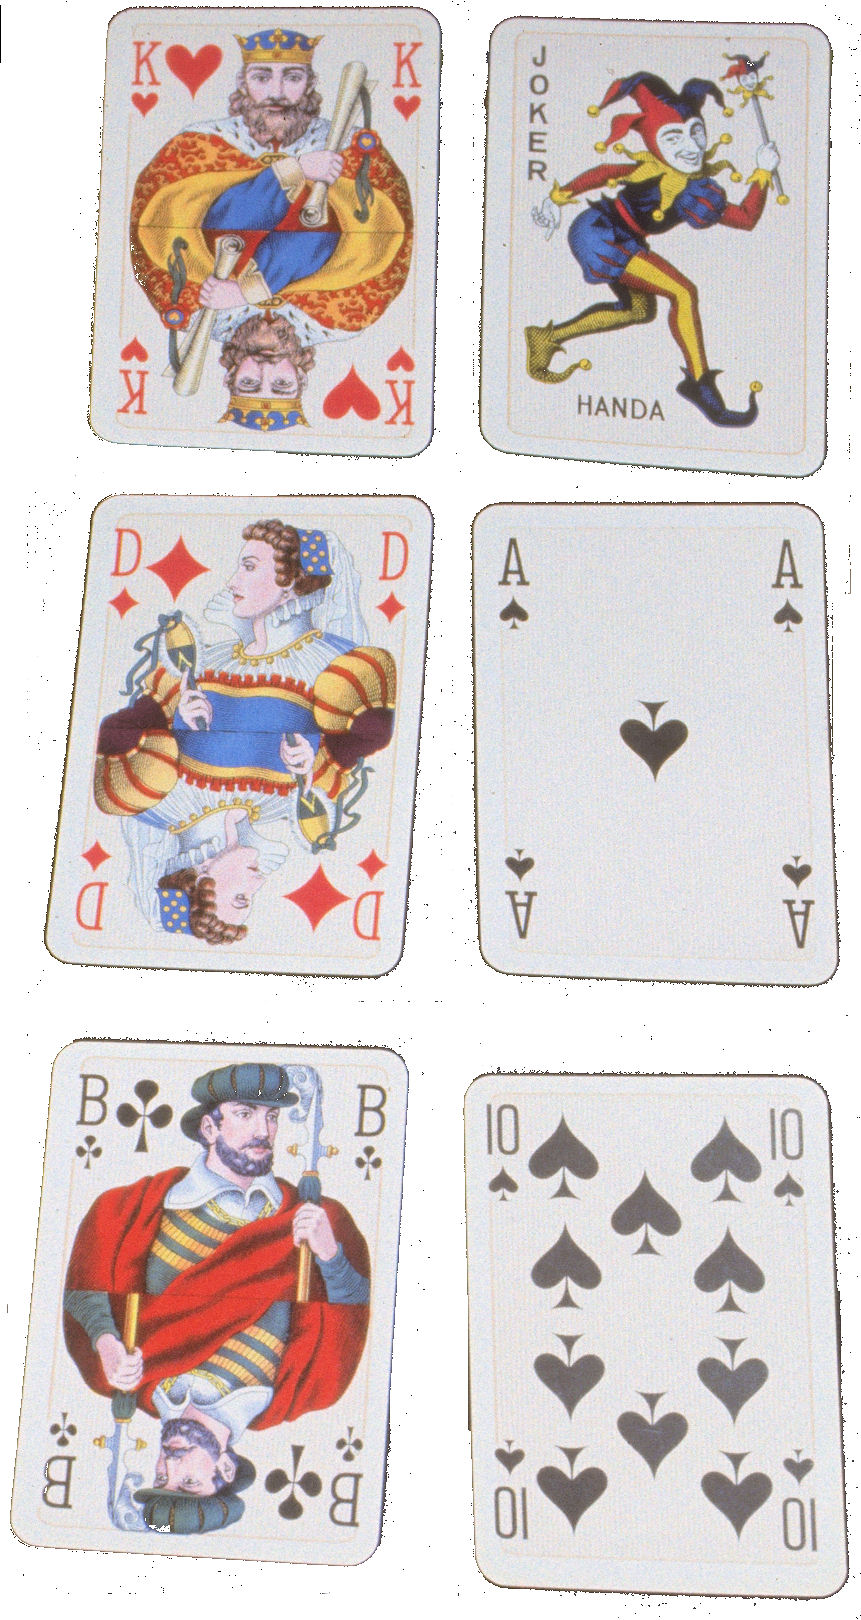 Uno Cards -  Denmark